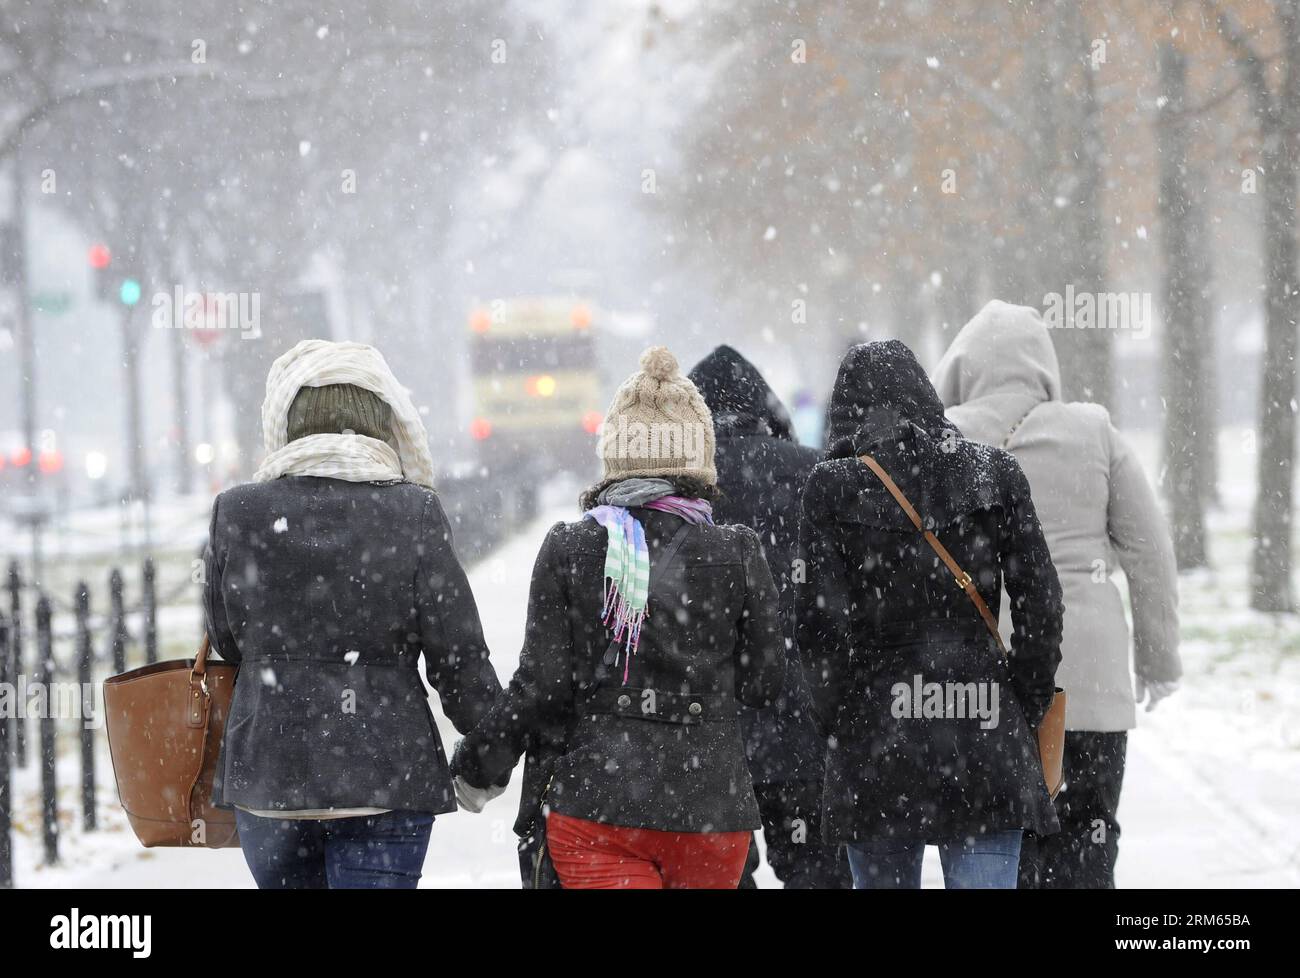 Bildnummer: 60808384  Datum: 08.12.2013  Copyright: imago/Xinhua     (131208) -- WASHINGTON D.C., Dec. 8, 2013 (Xinhua) -- walk in snow in Washington D.C., Dec. 8, 2013. (Xinhua/Zhang Jun) U.S.-WASHINGTON D.C.-SNOW PUBLICATIONxNOTxINxCHN Gesellschaft Wetter Winter Schnee xcb x0x 2013 quer premiumd Stock Photo